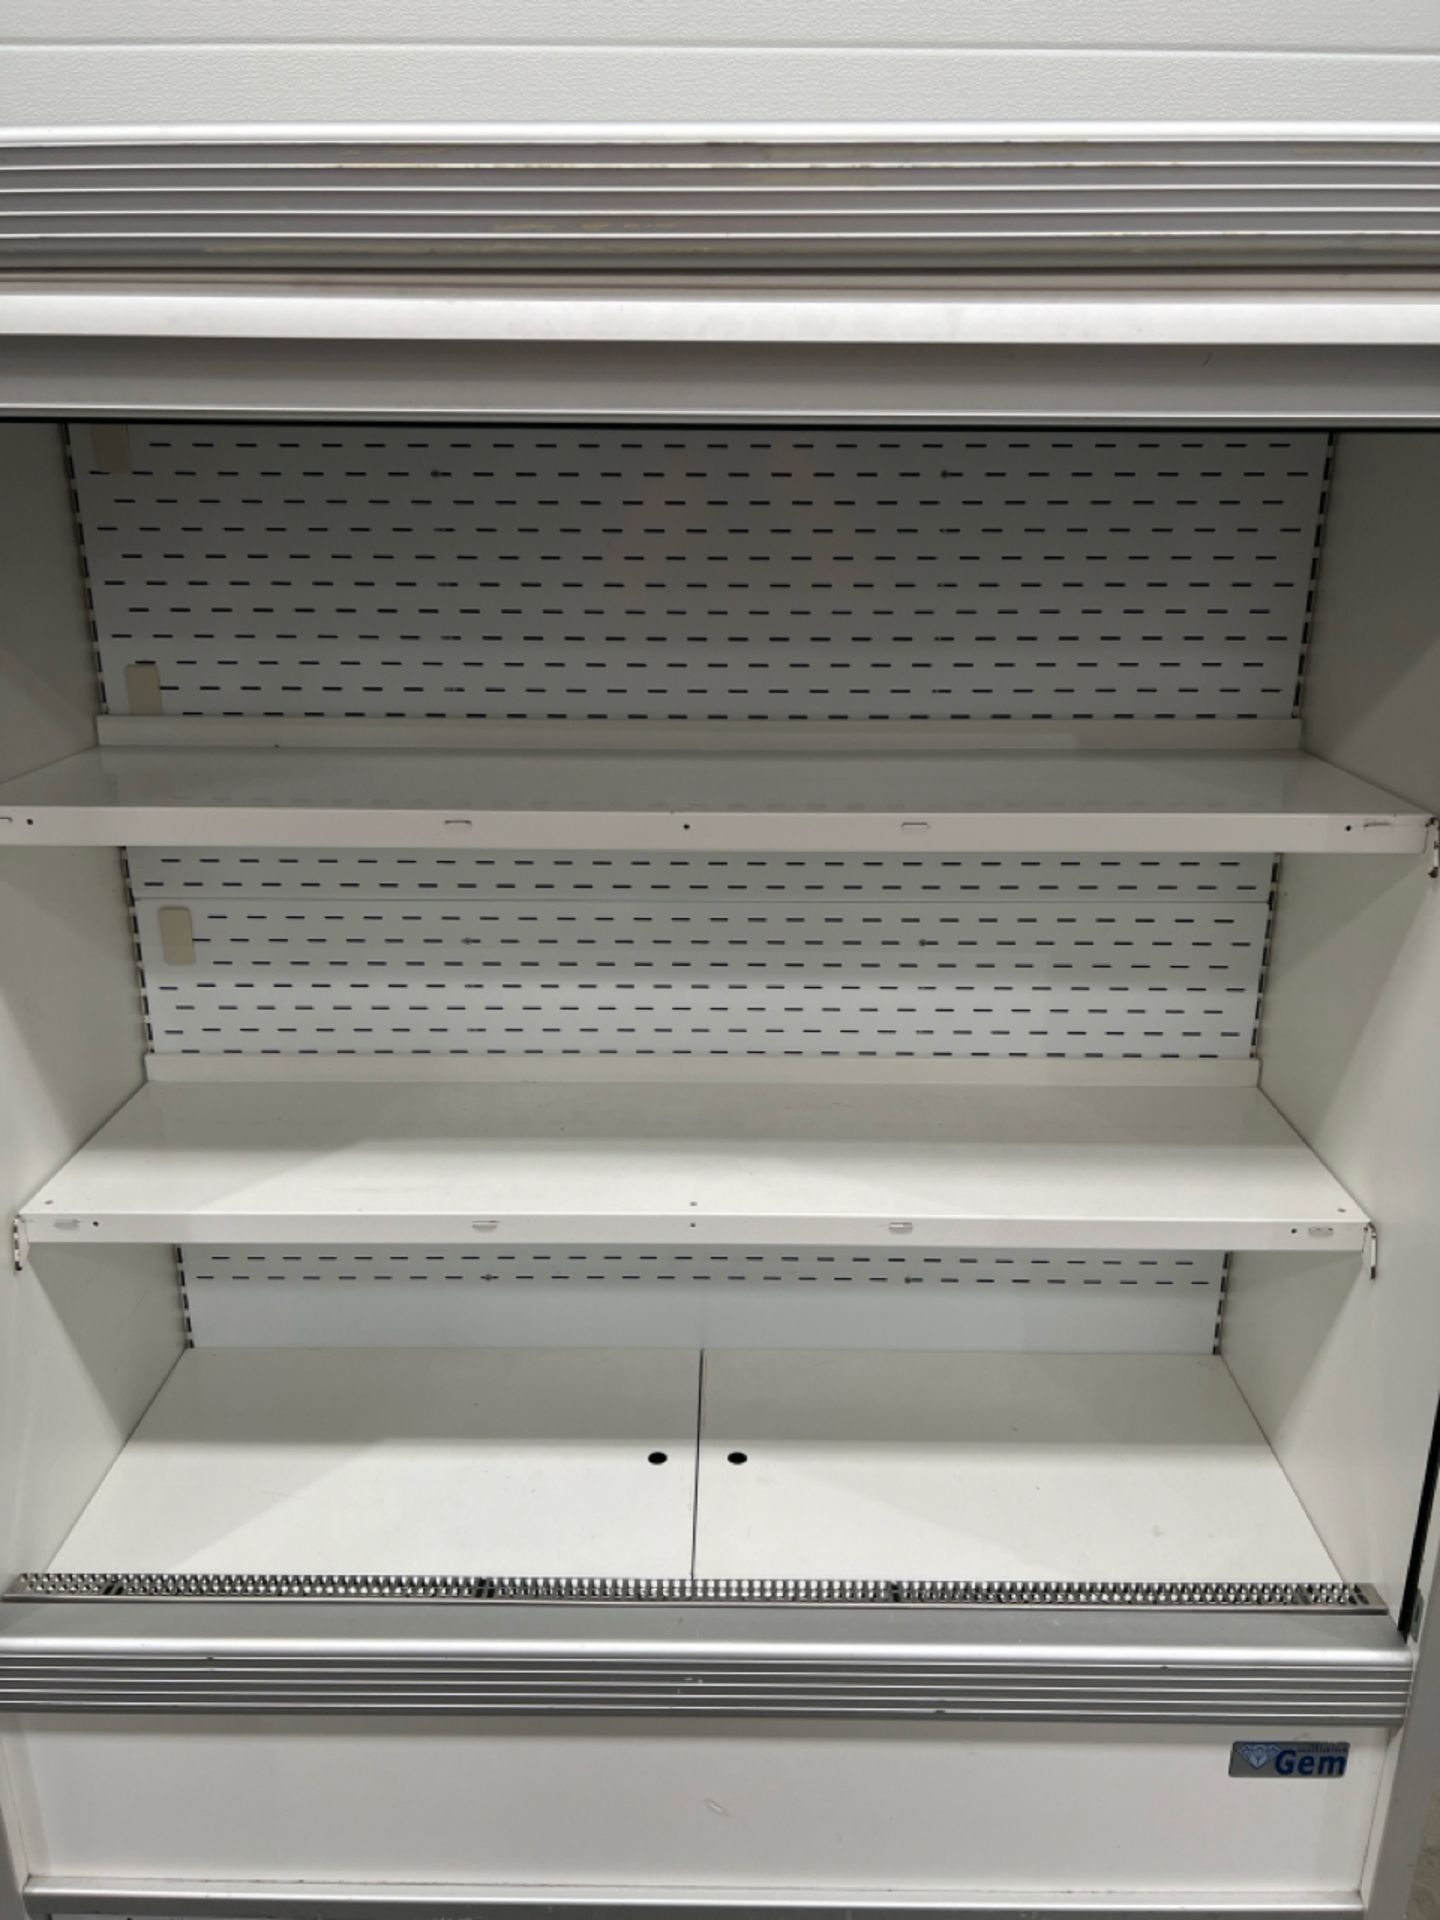 Williams Gem Refrigerator - Image 2 of 6